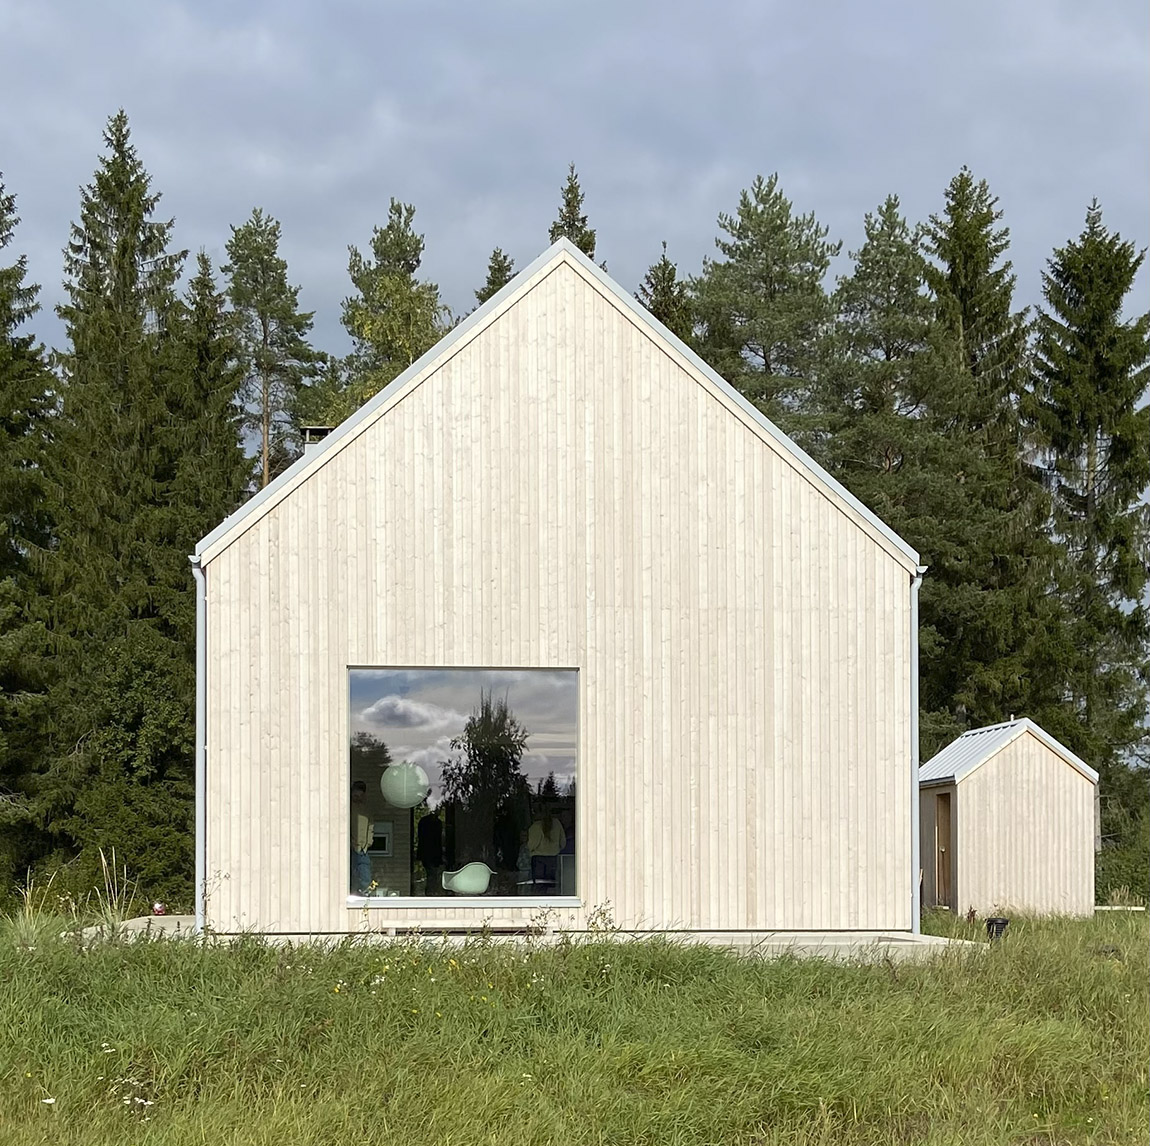 Architect Takkunen: The Finnish architects fluent in timeless Nordic design